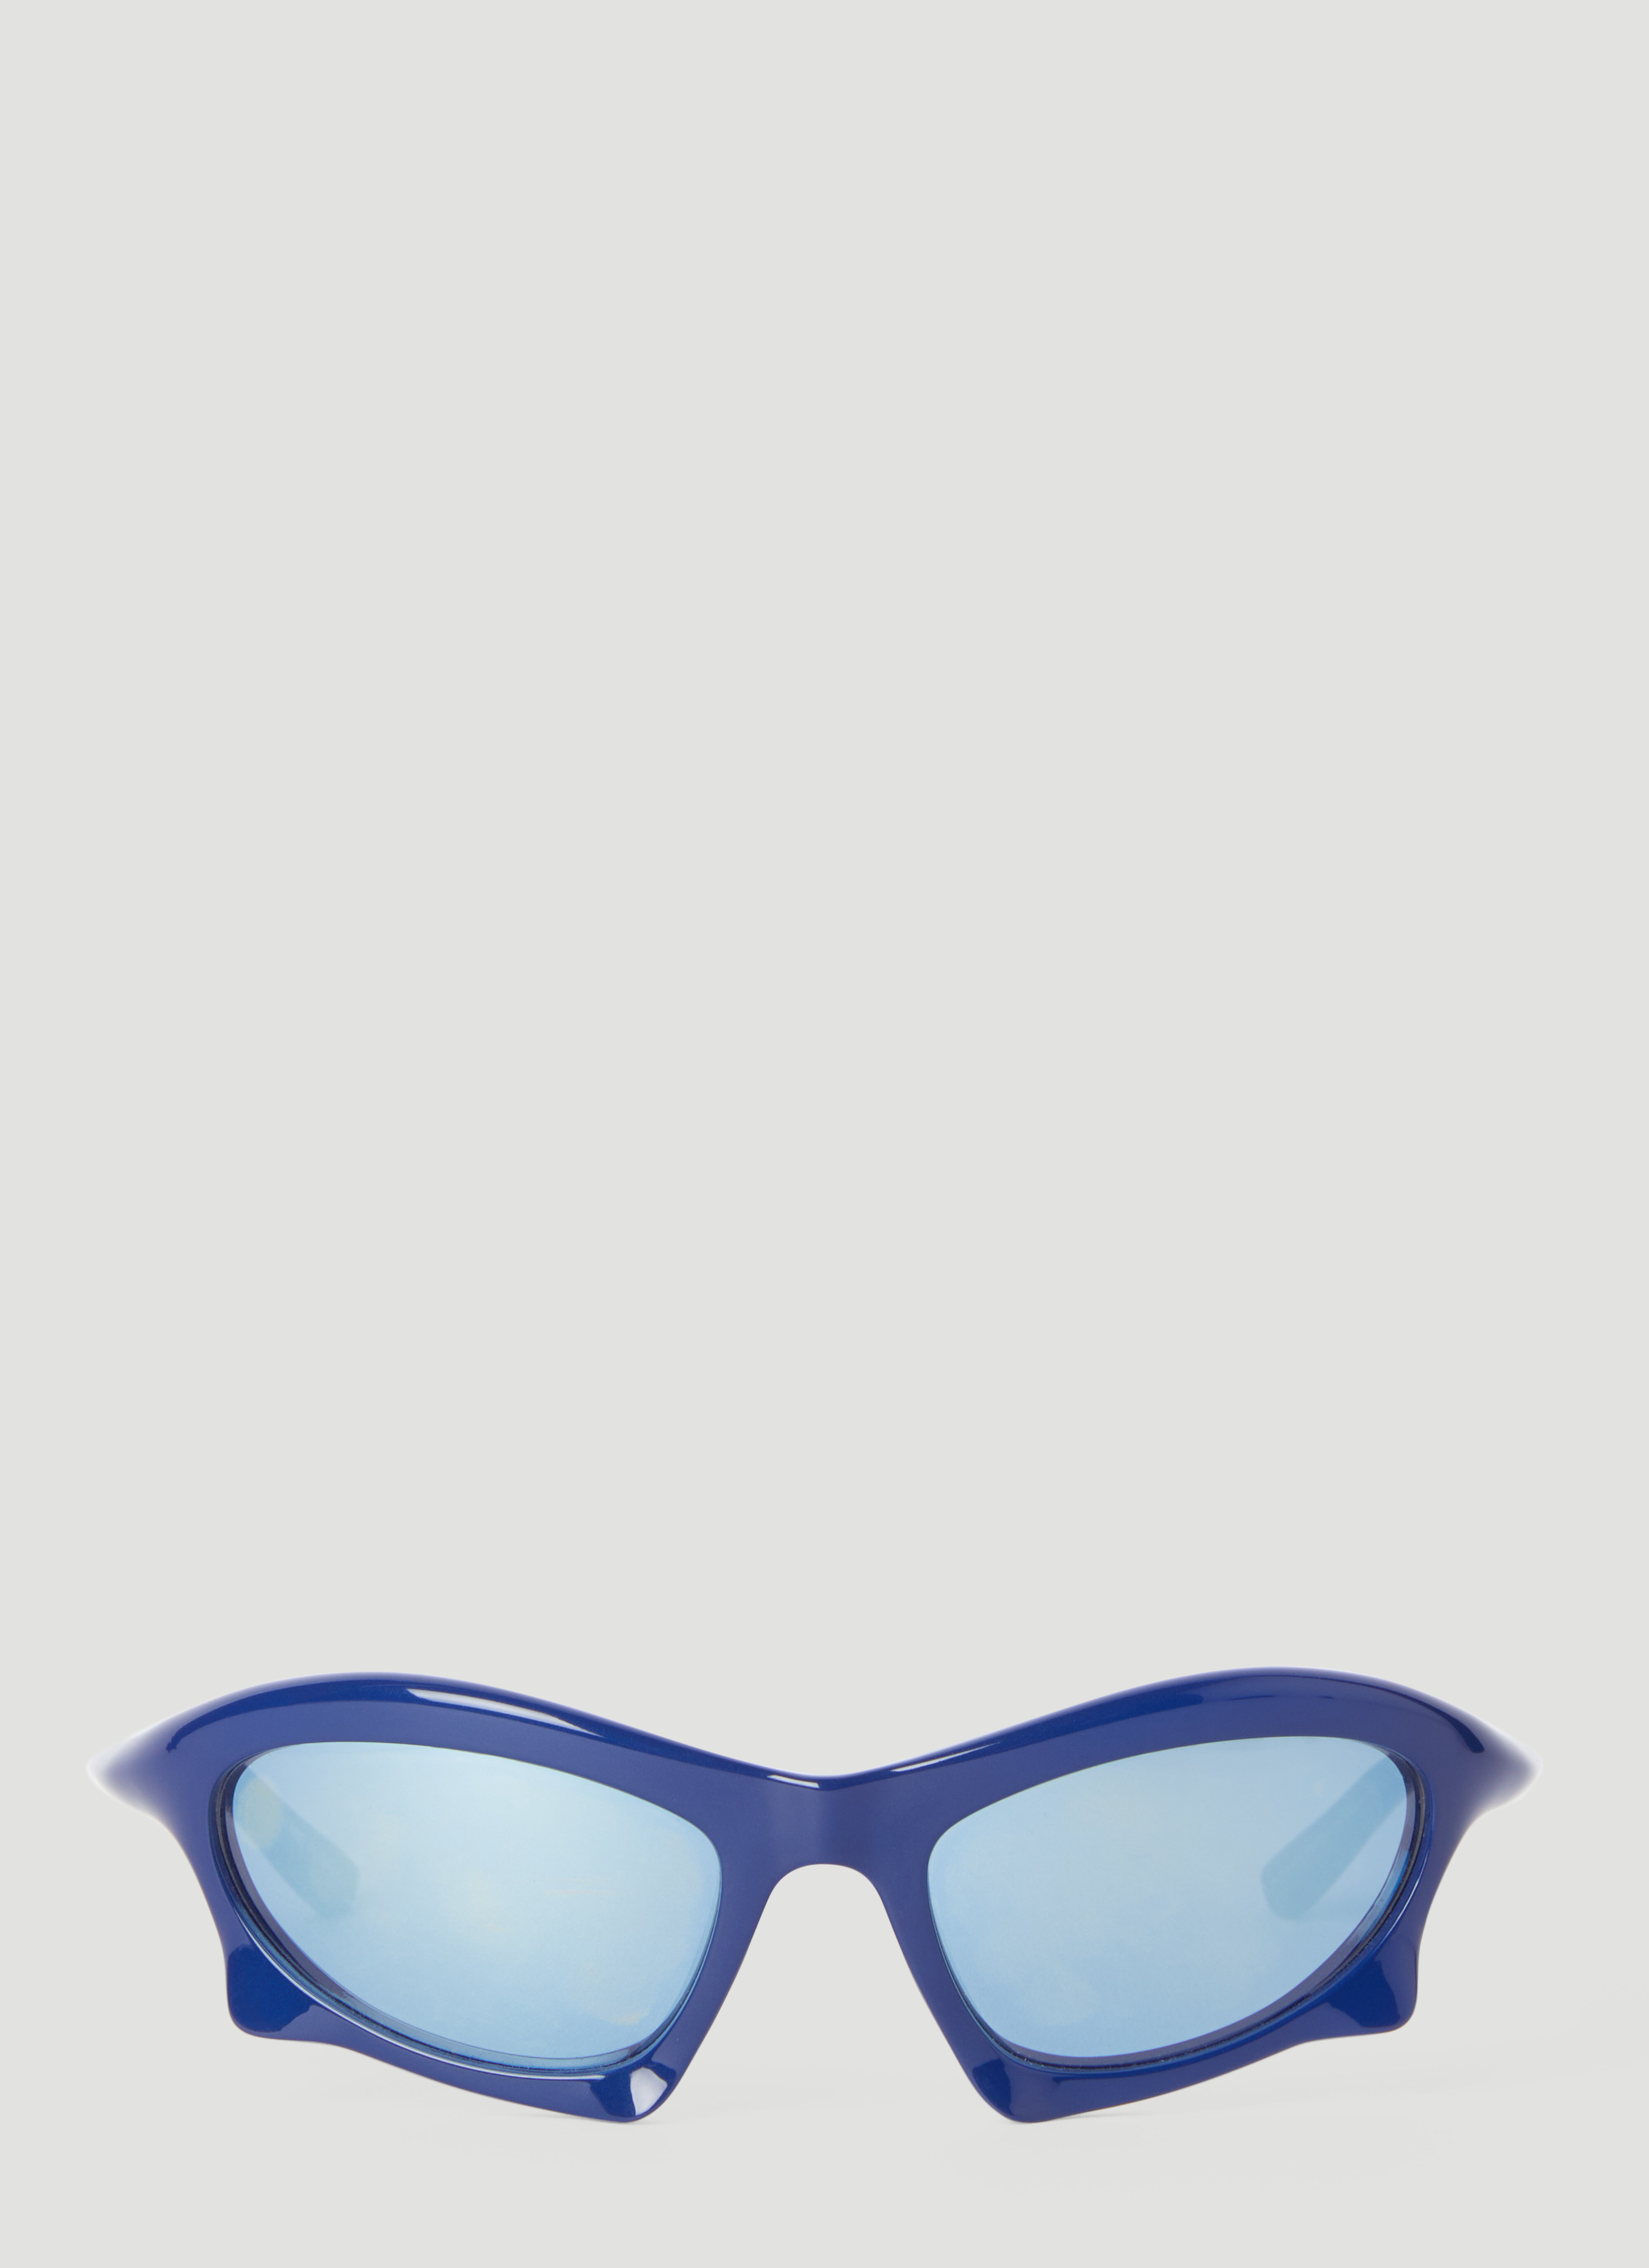 Acne Studios Bat Rectangle Sunglasses Silver cns0356002